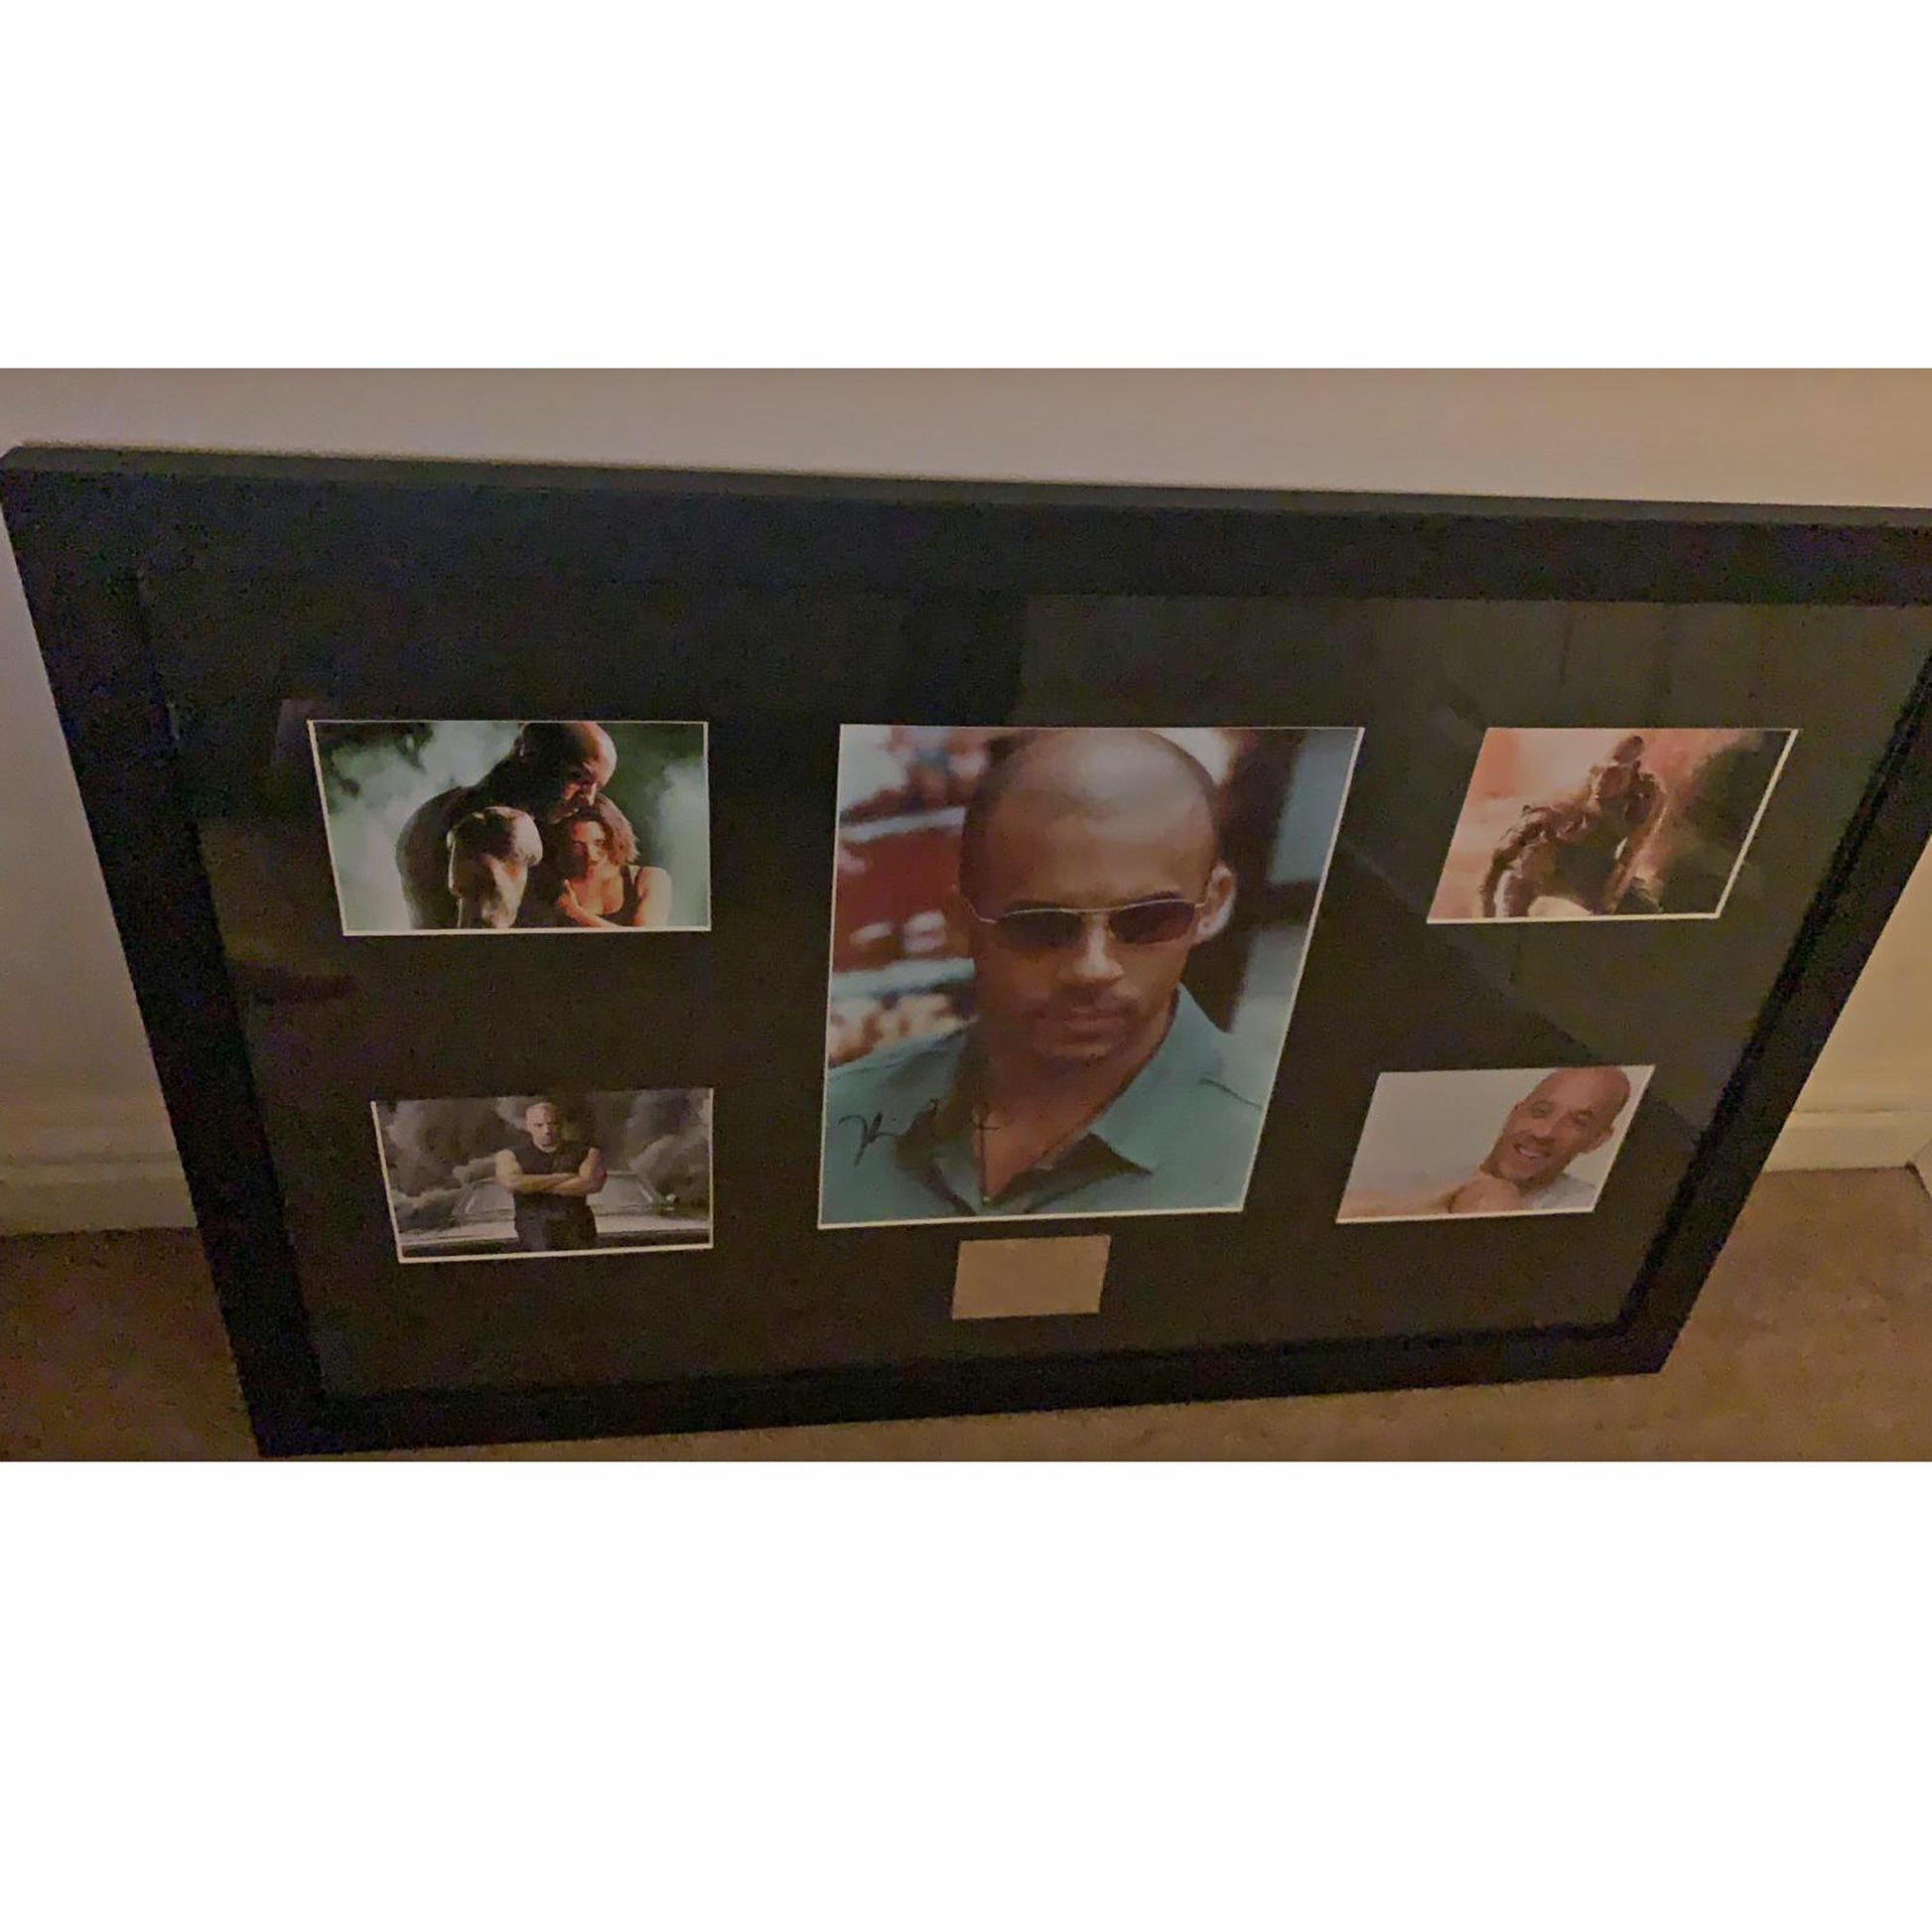 Vin Diesel Collectable Memorabilia Signed Frame